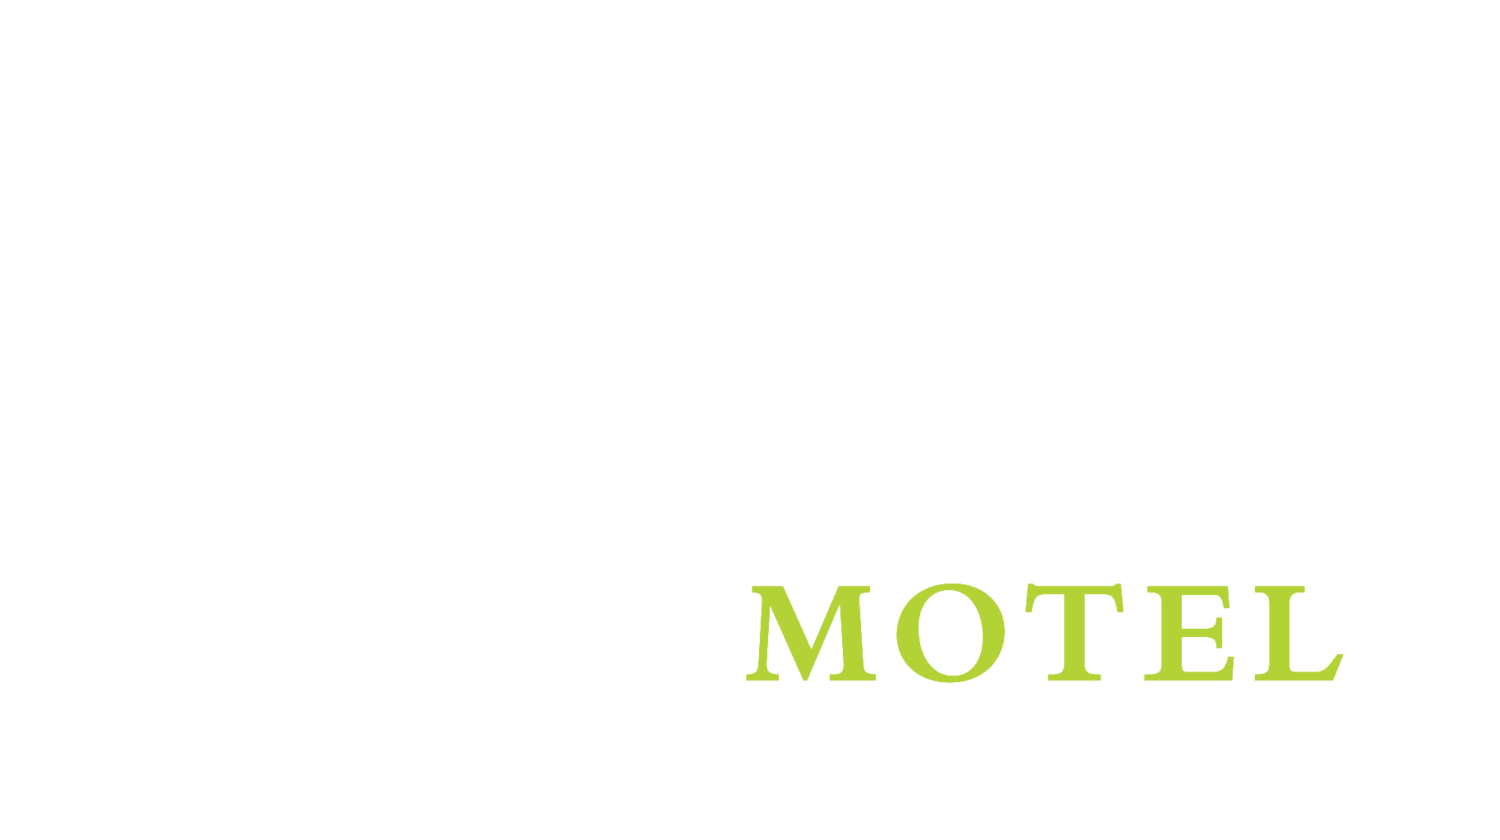 Legends Motel